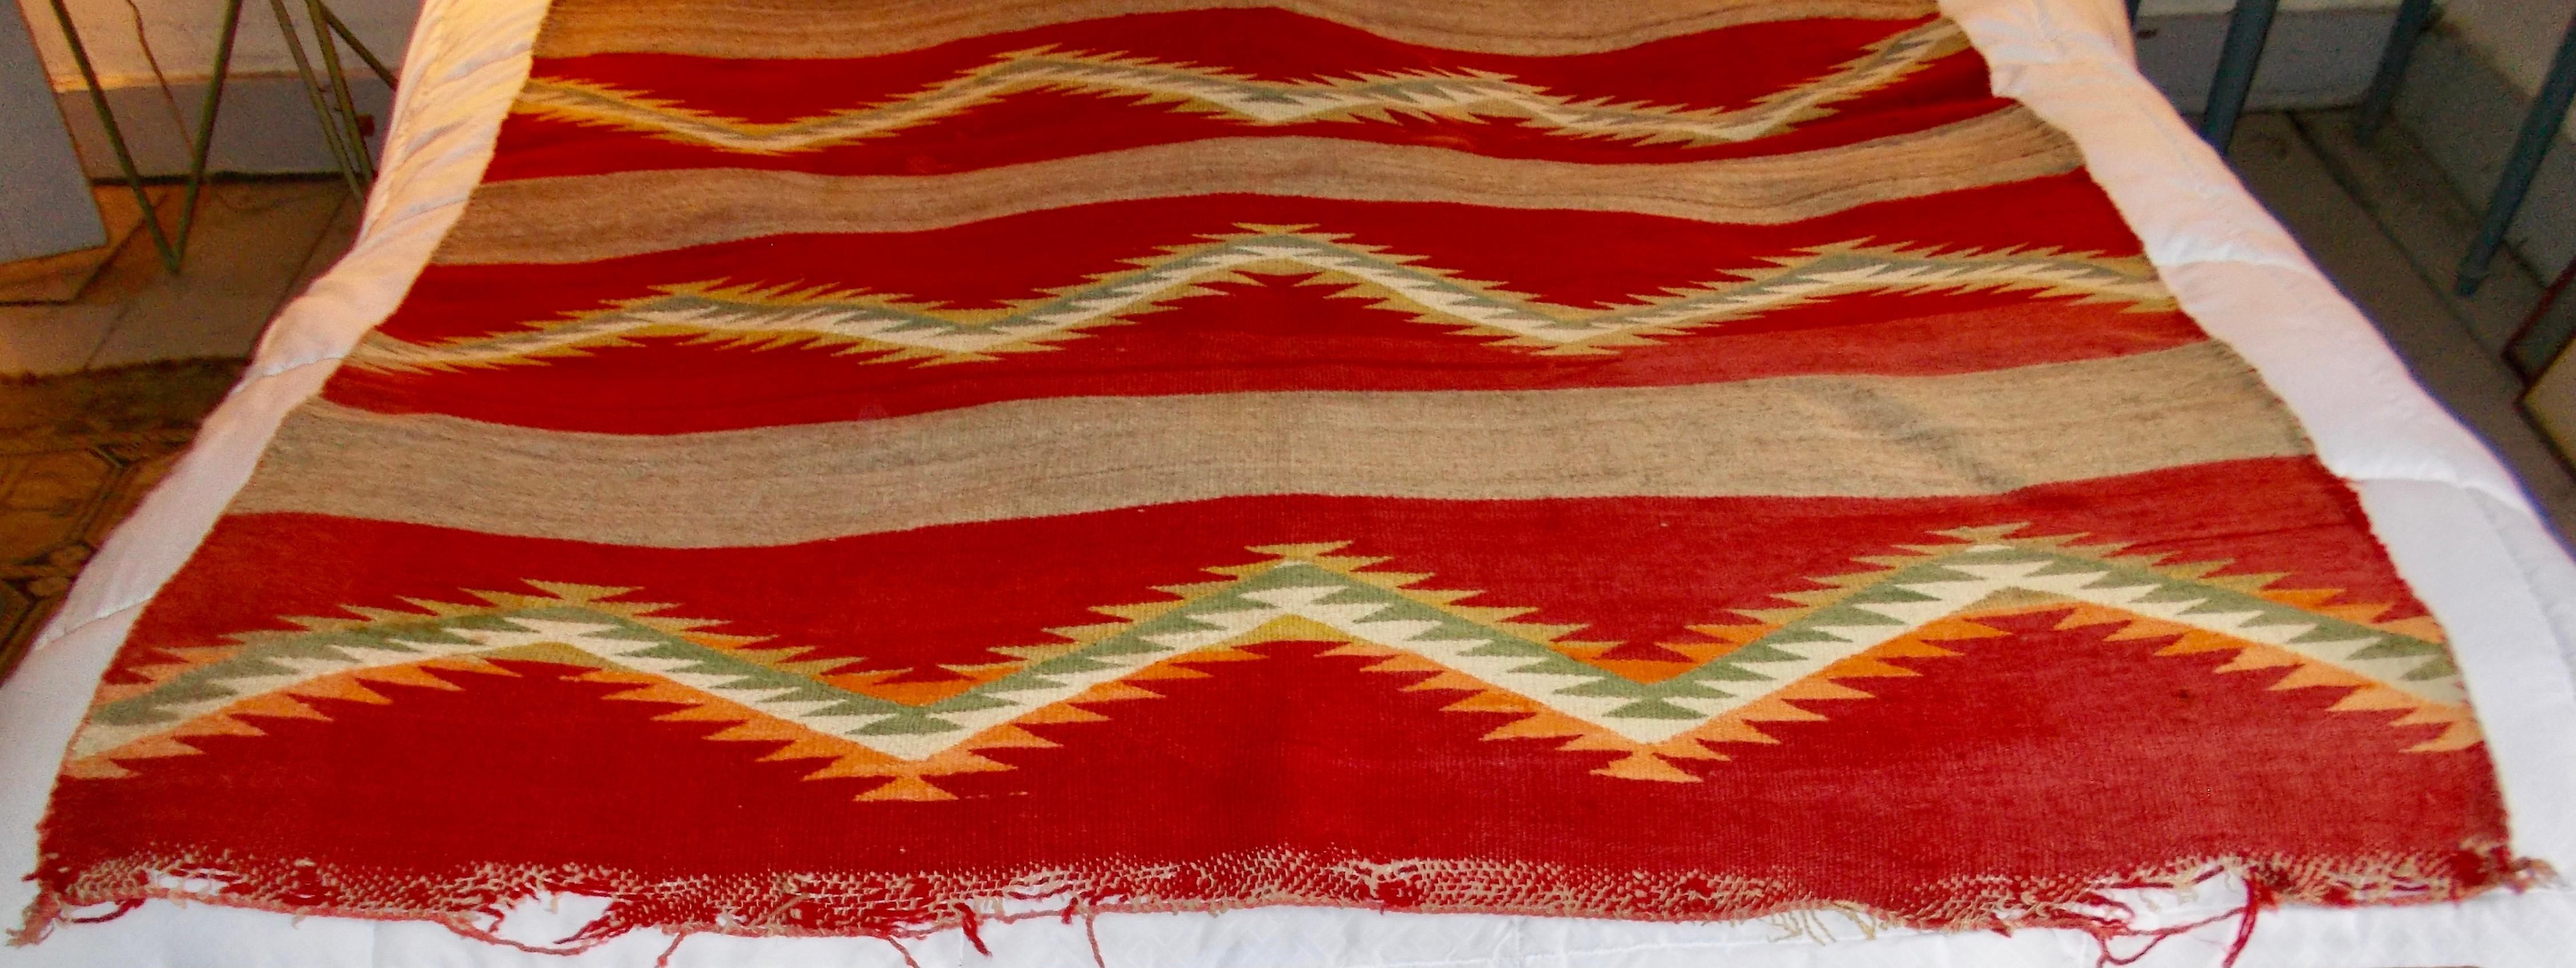 Navajo Transitional Blanket, circa 1880-1900 2